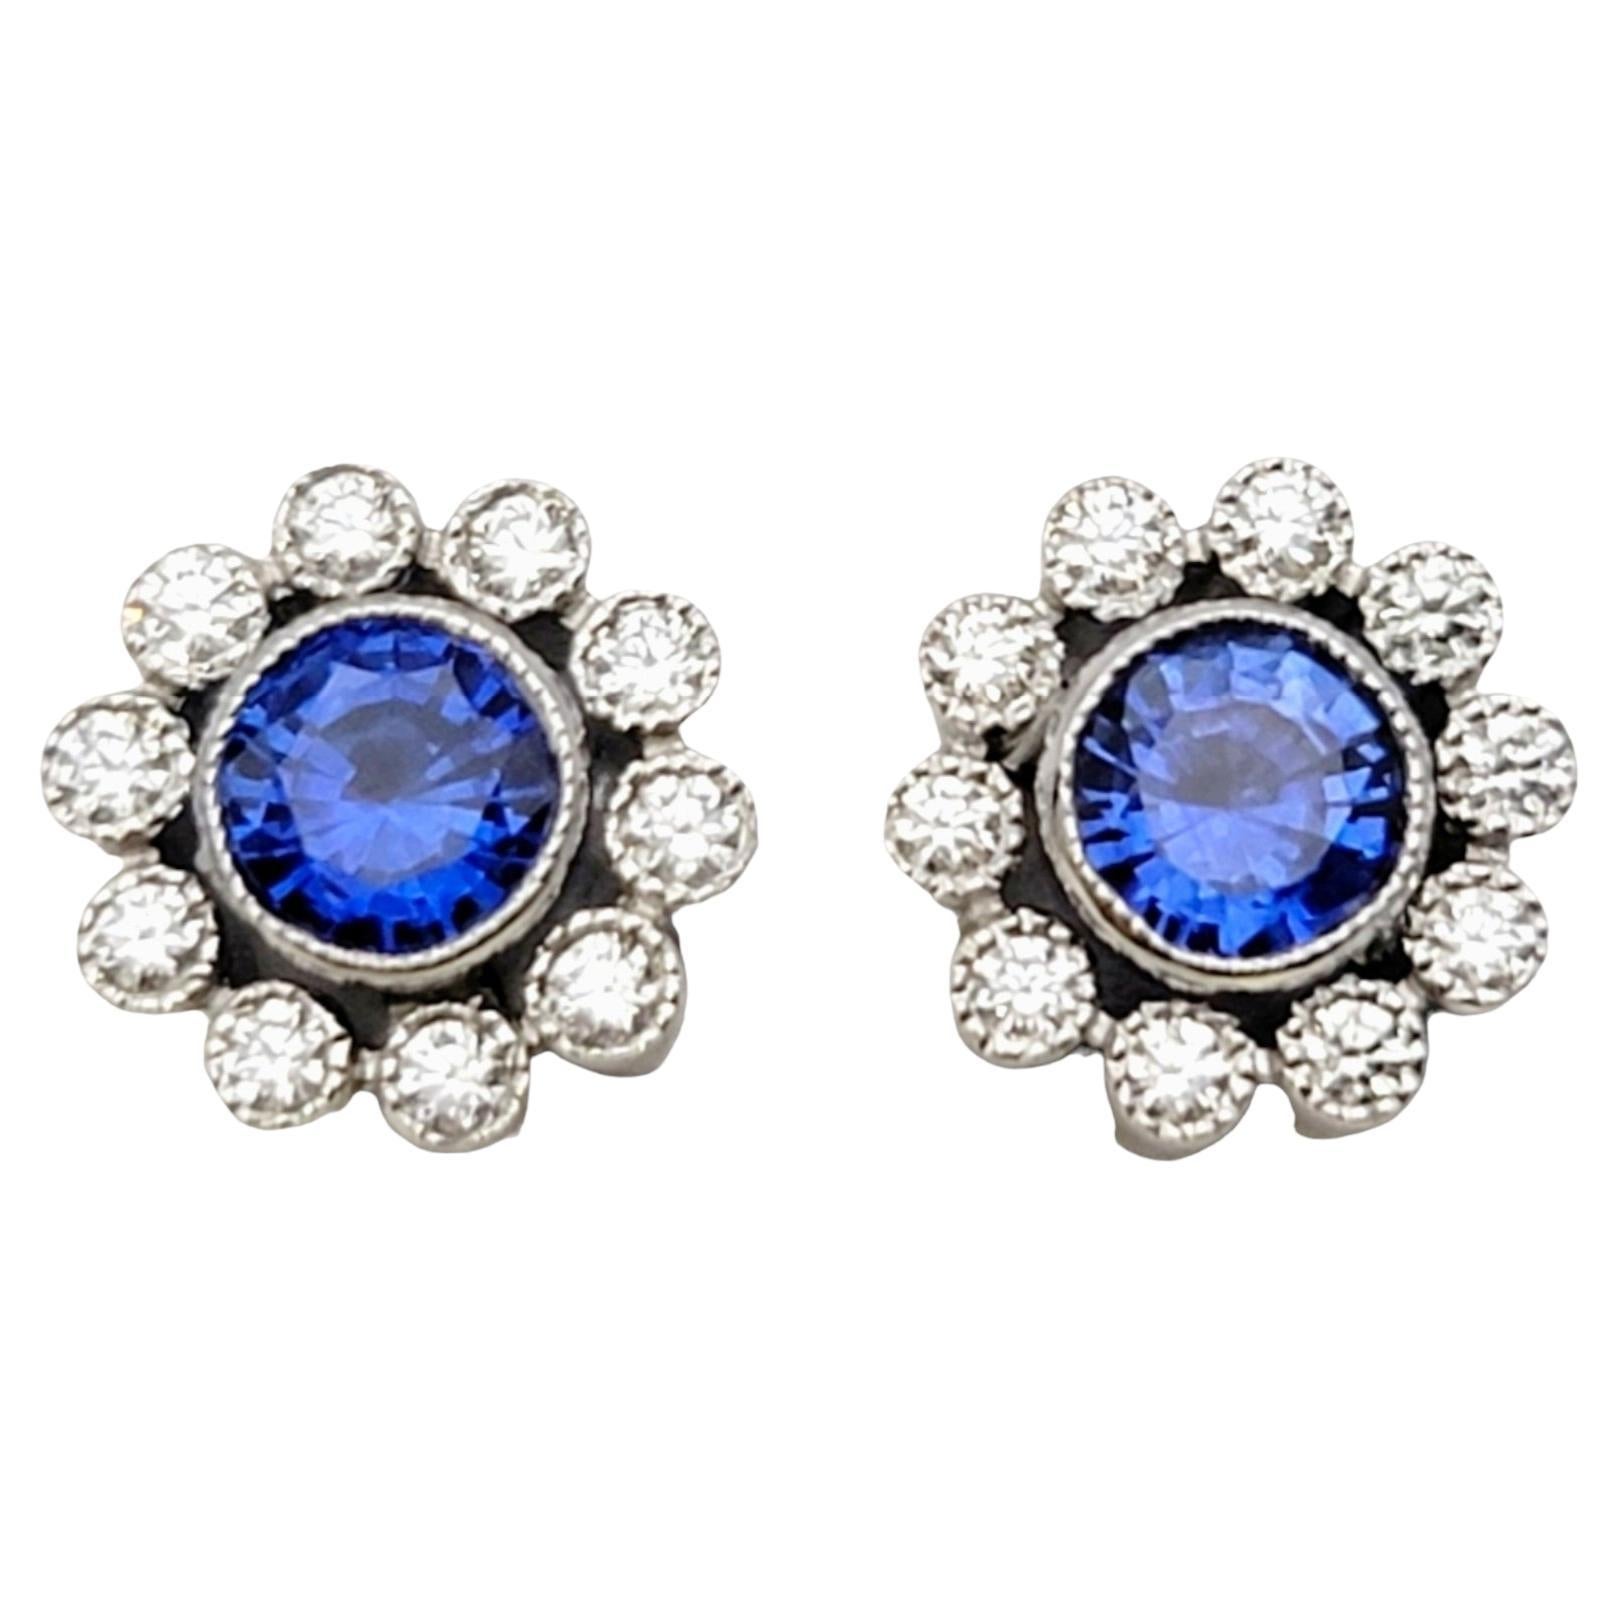 Tiffany & Co. Sapphire and Diamond Halo Stud Earrings Platinum .80 Carats Total